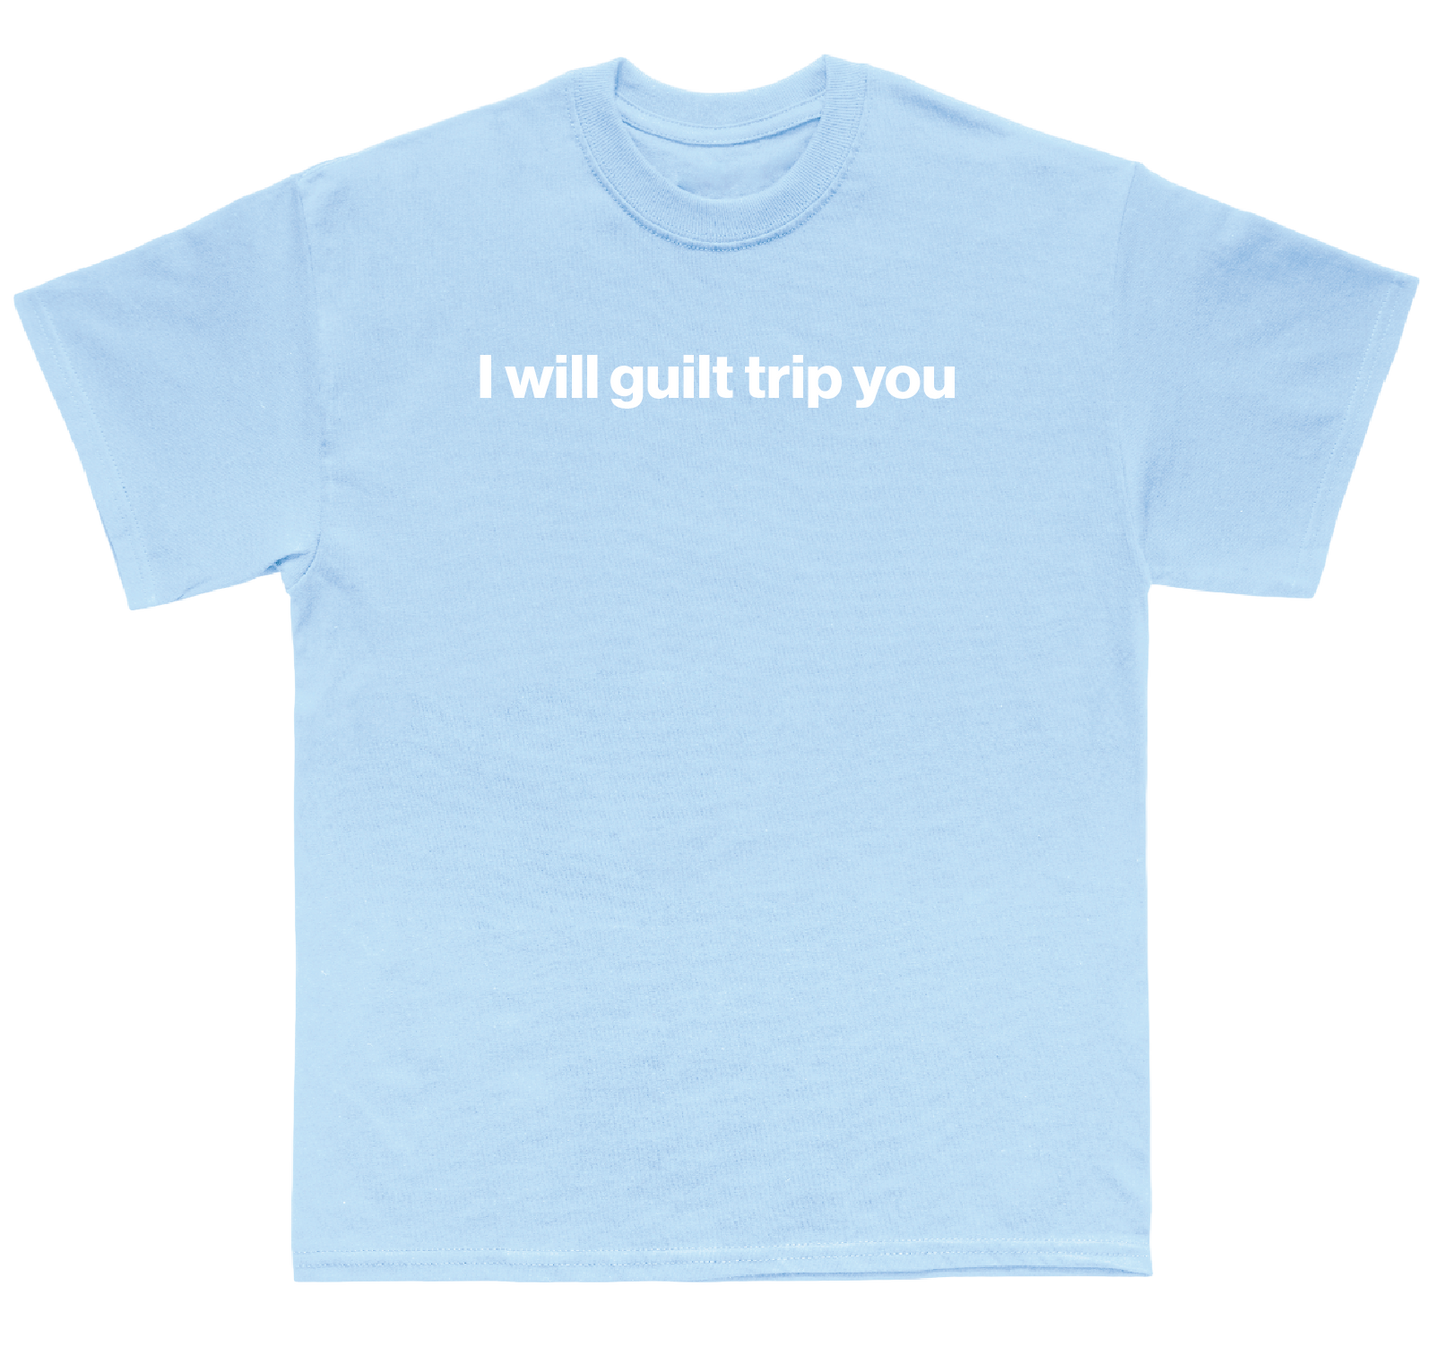 I will guilt trip you shirt